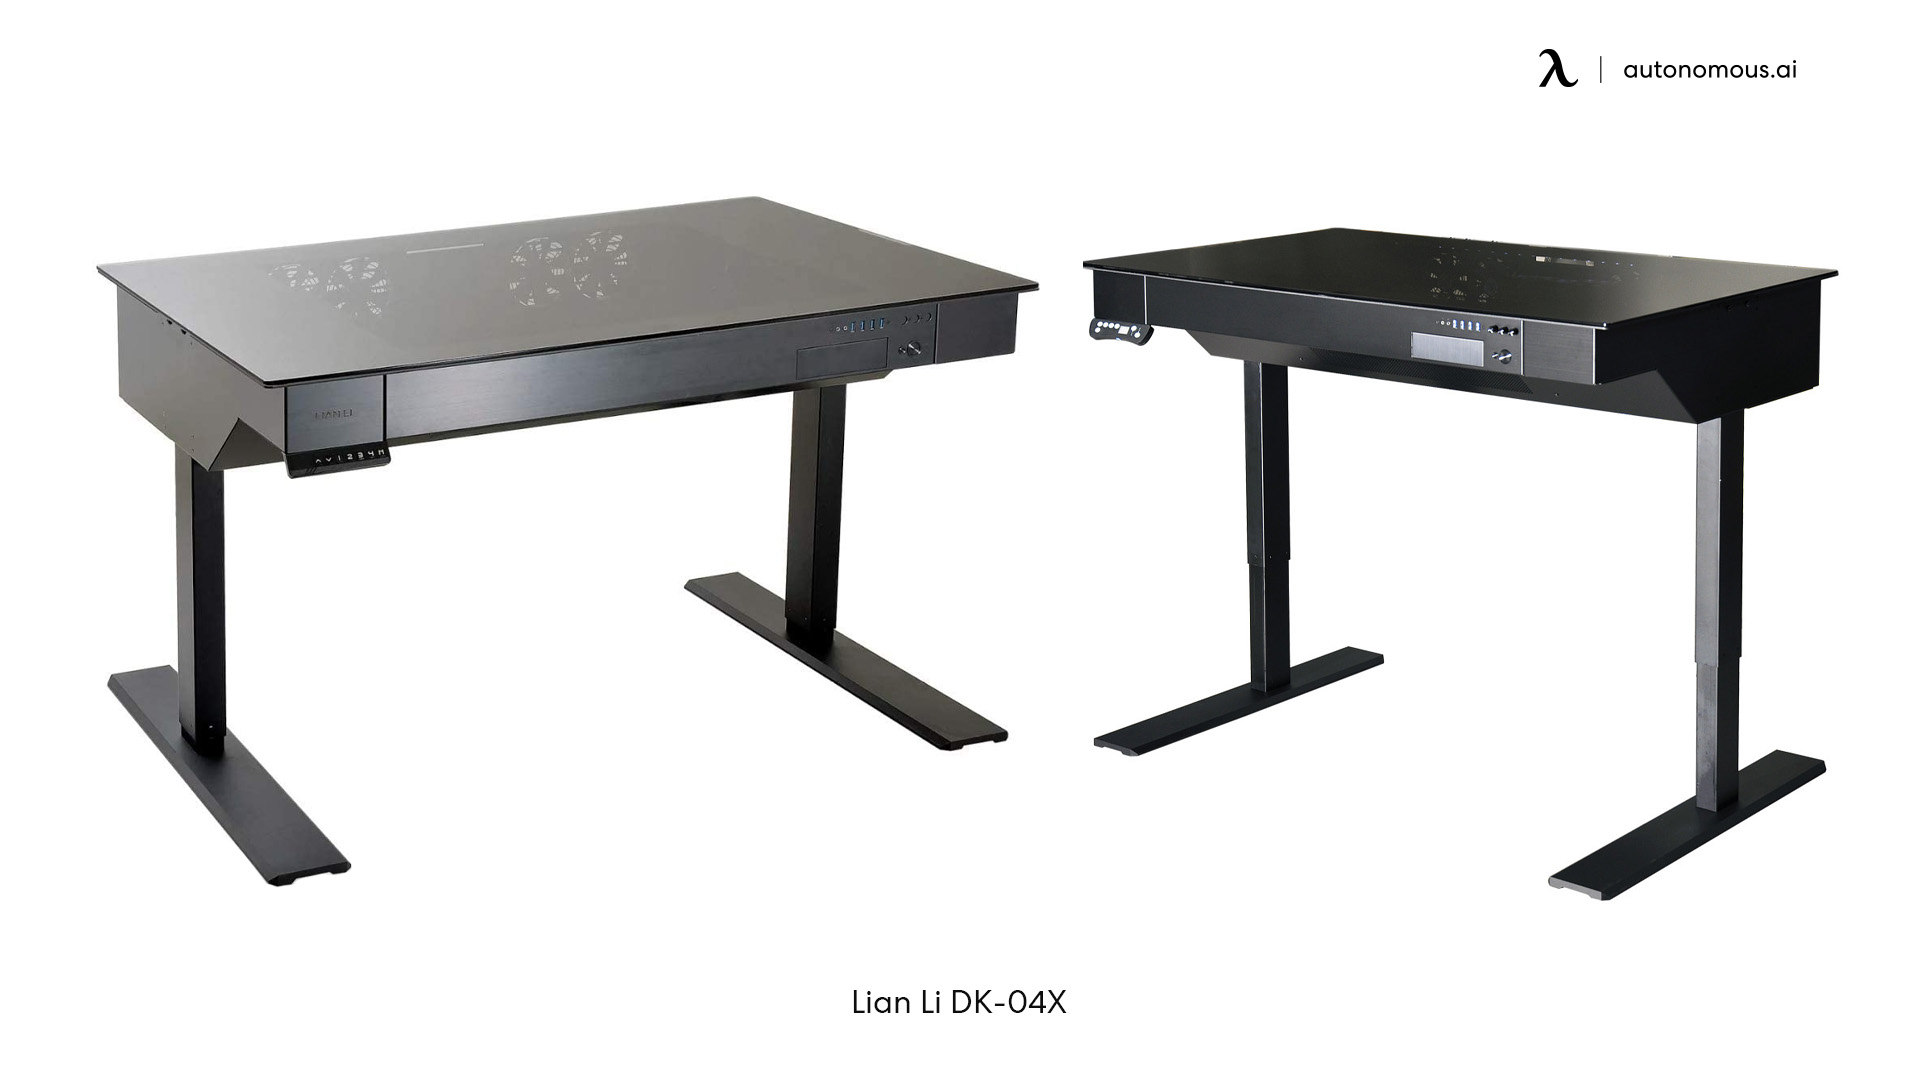 Lian Li DK-04X RGB gaming desk